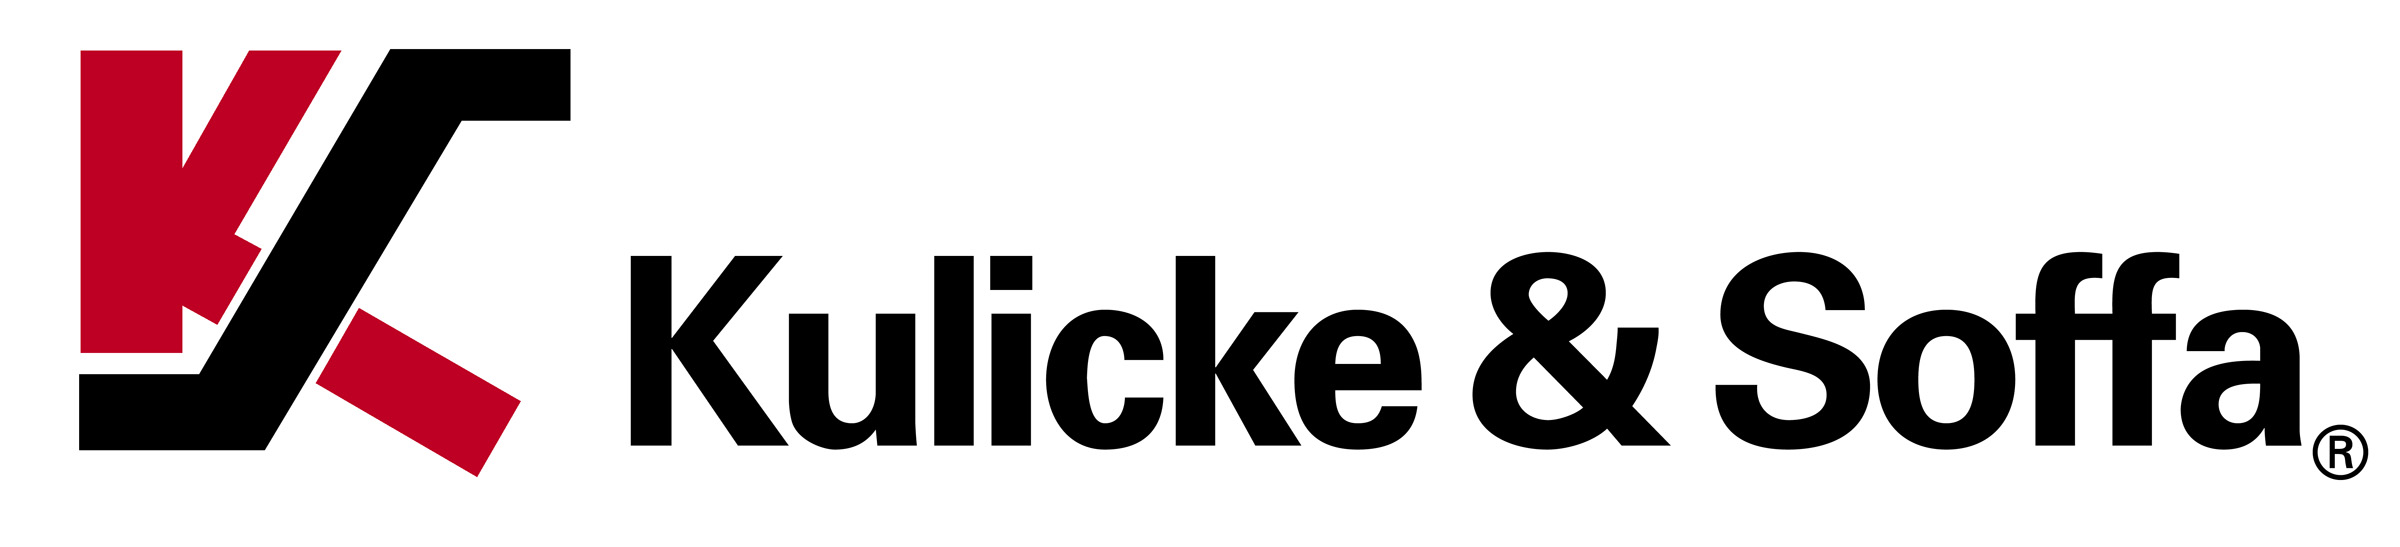 kulicke & soffa stock price - market watch